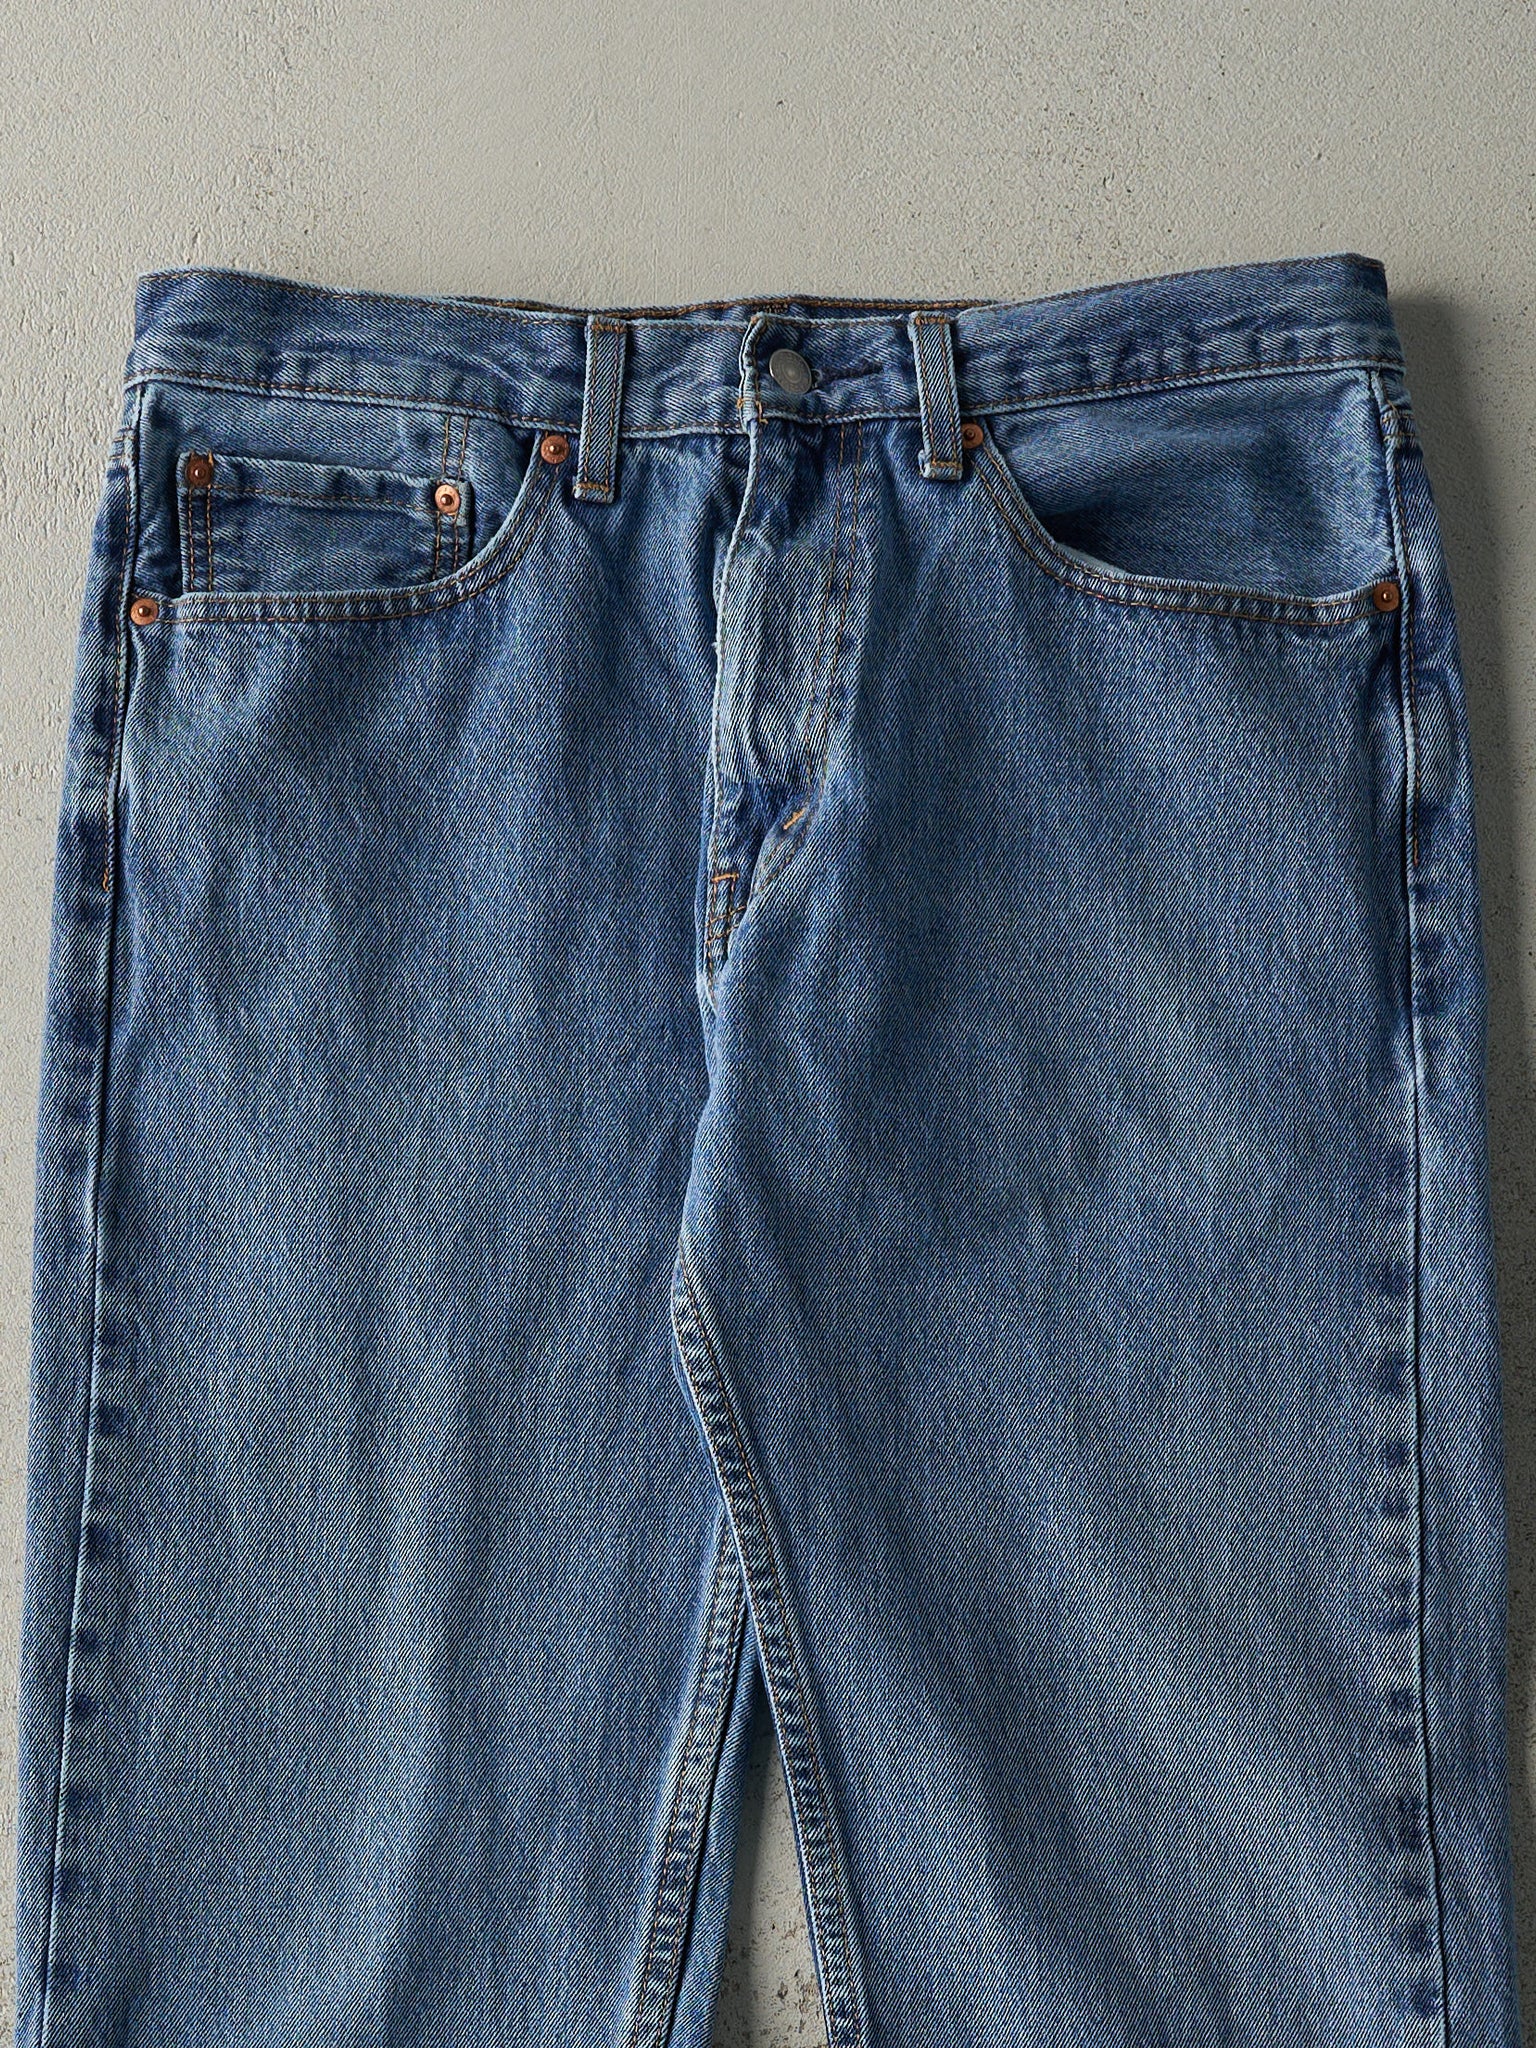 Vintage Y2K Light Wash Levi's 505 Jeans (34x31)